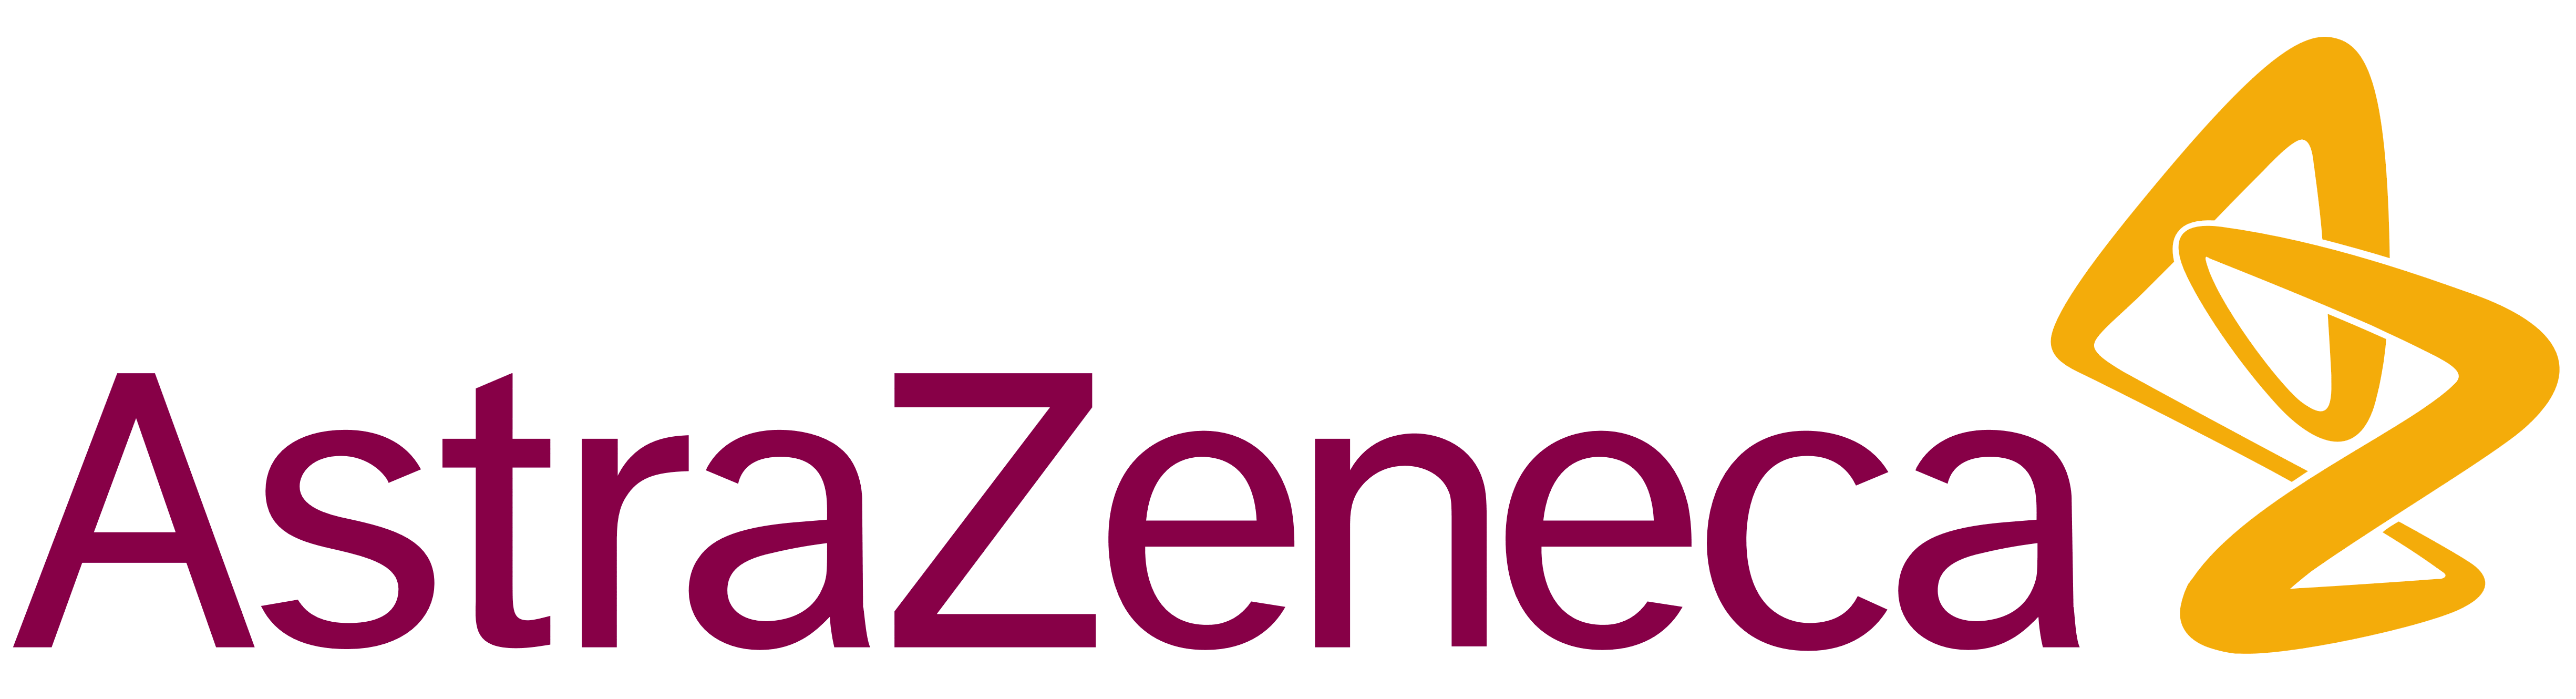 AstraZeneca Logo | Business Communications Training ...